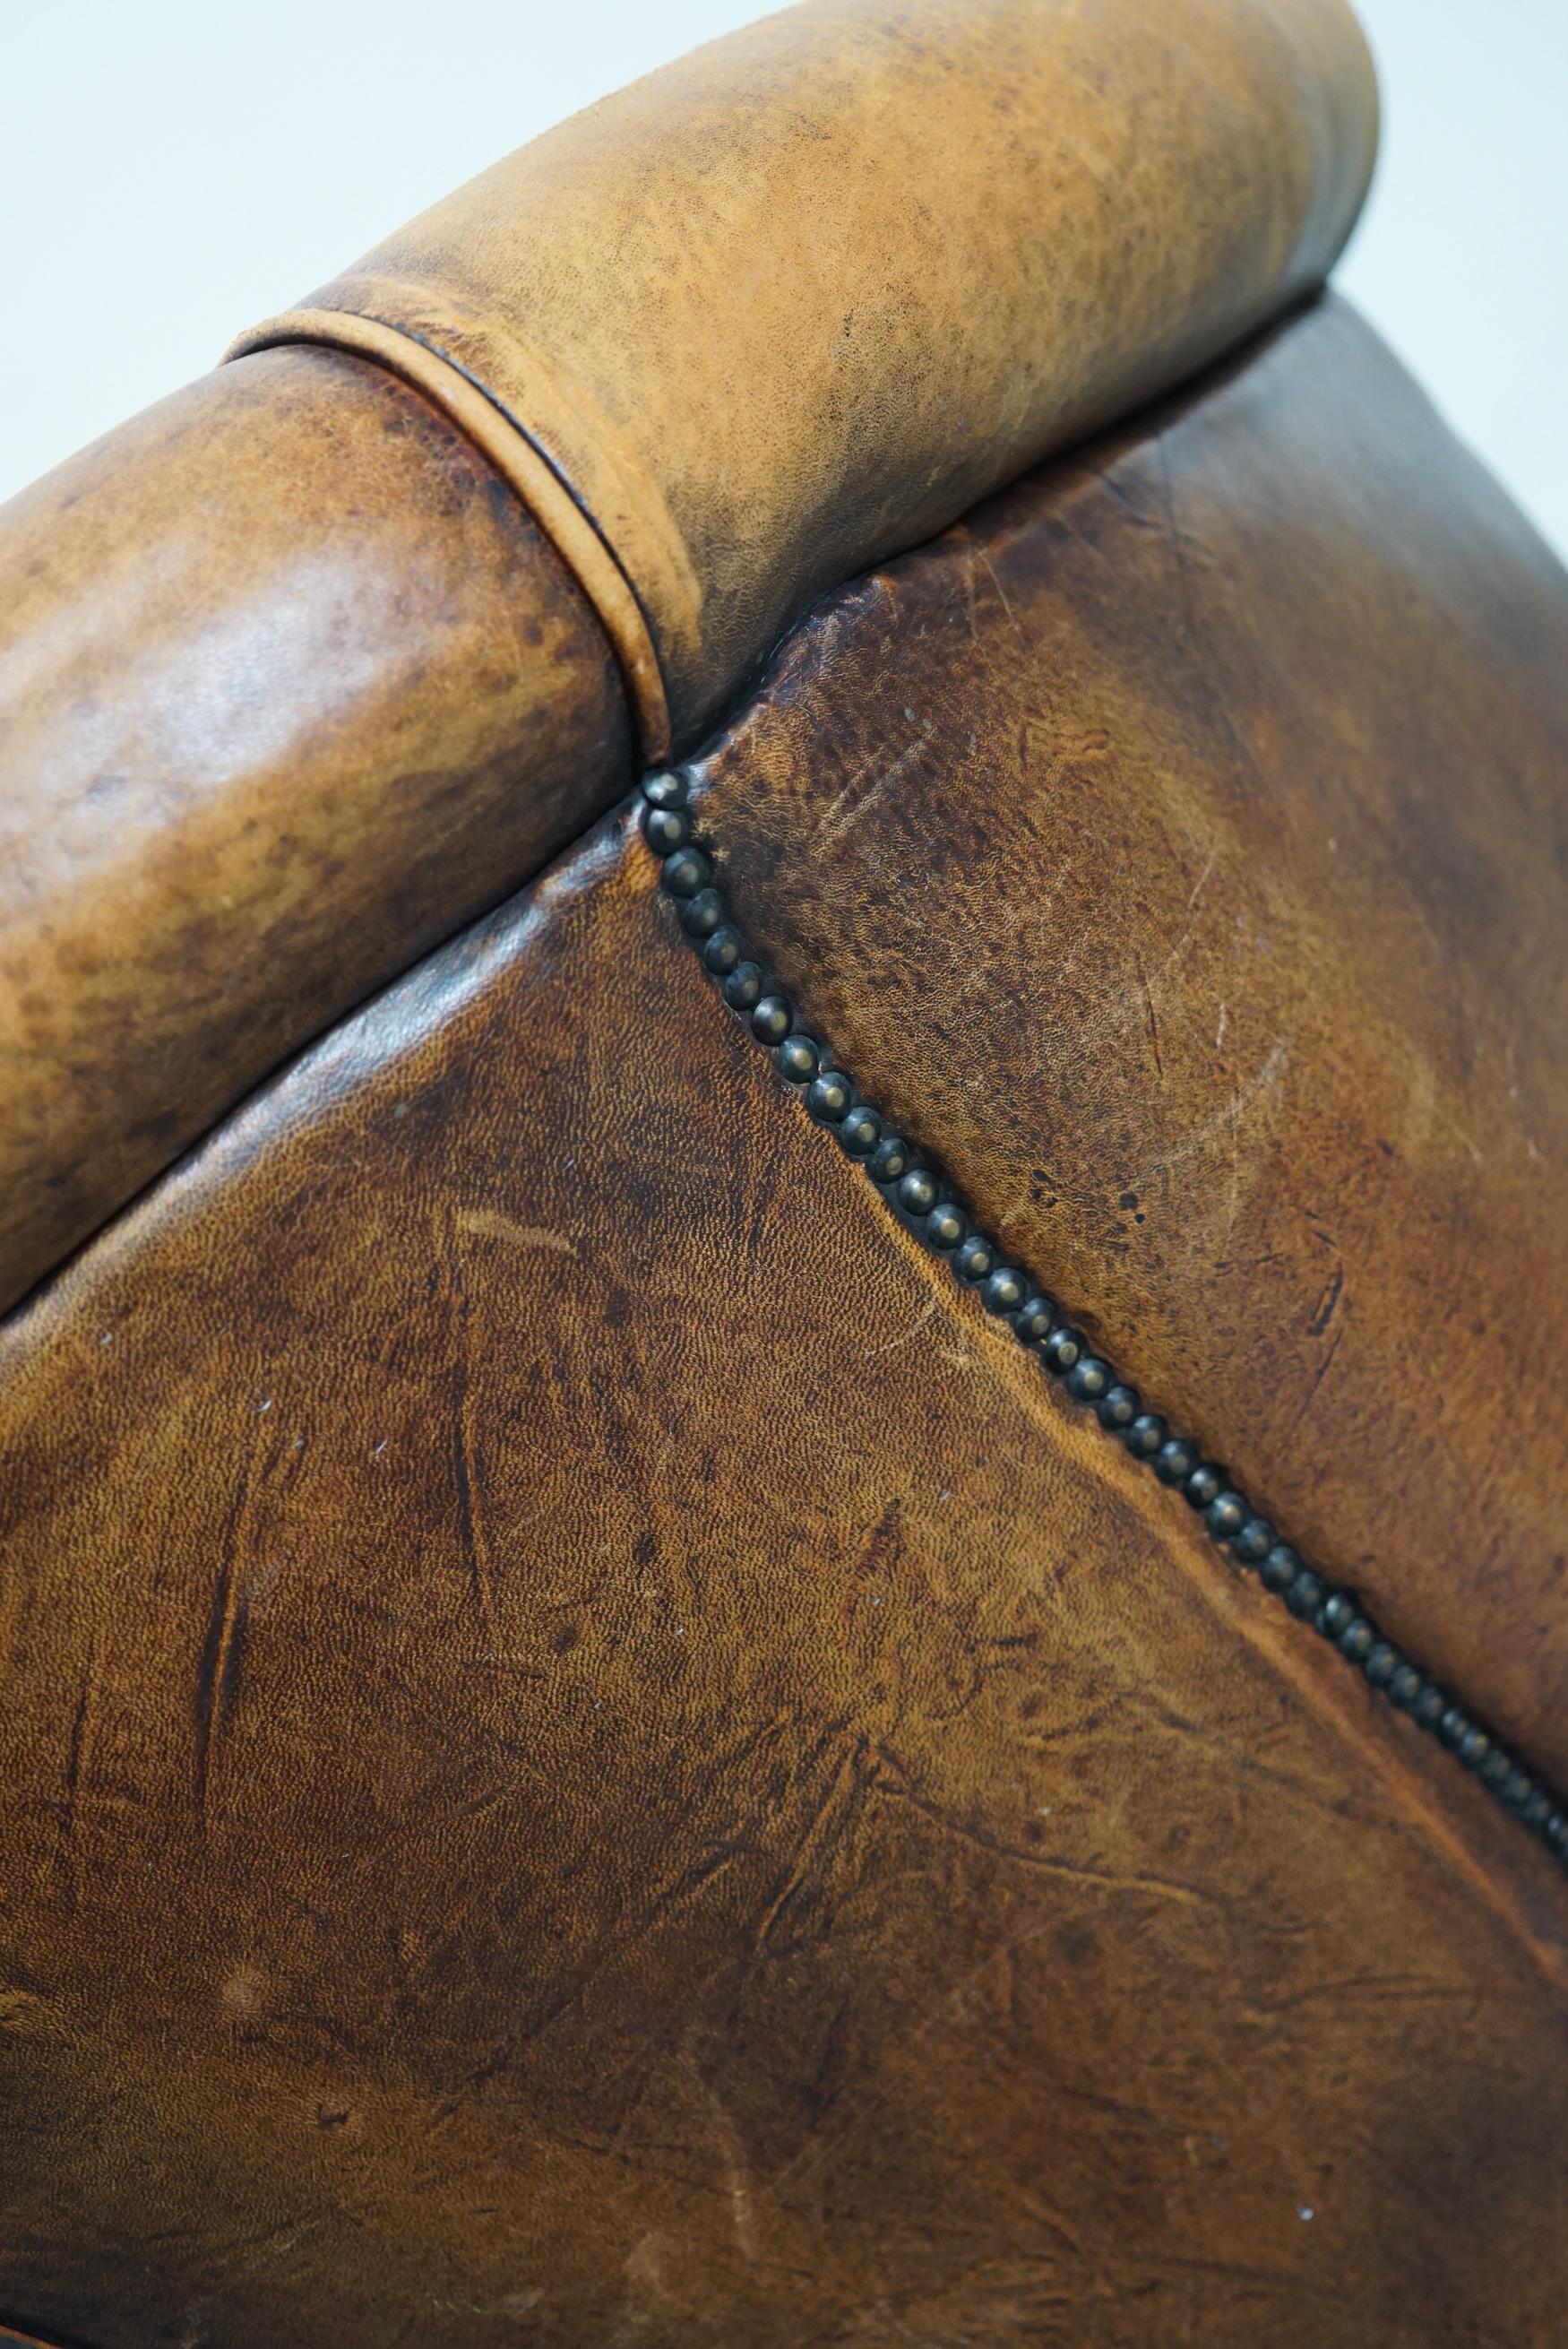 Vintage Dutch Cognac Colored Leather Club Chair For Sale 6